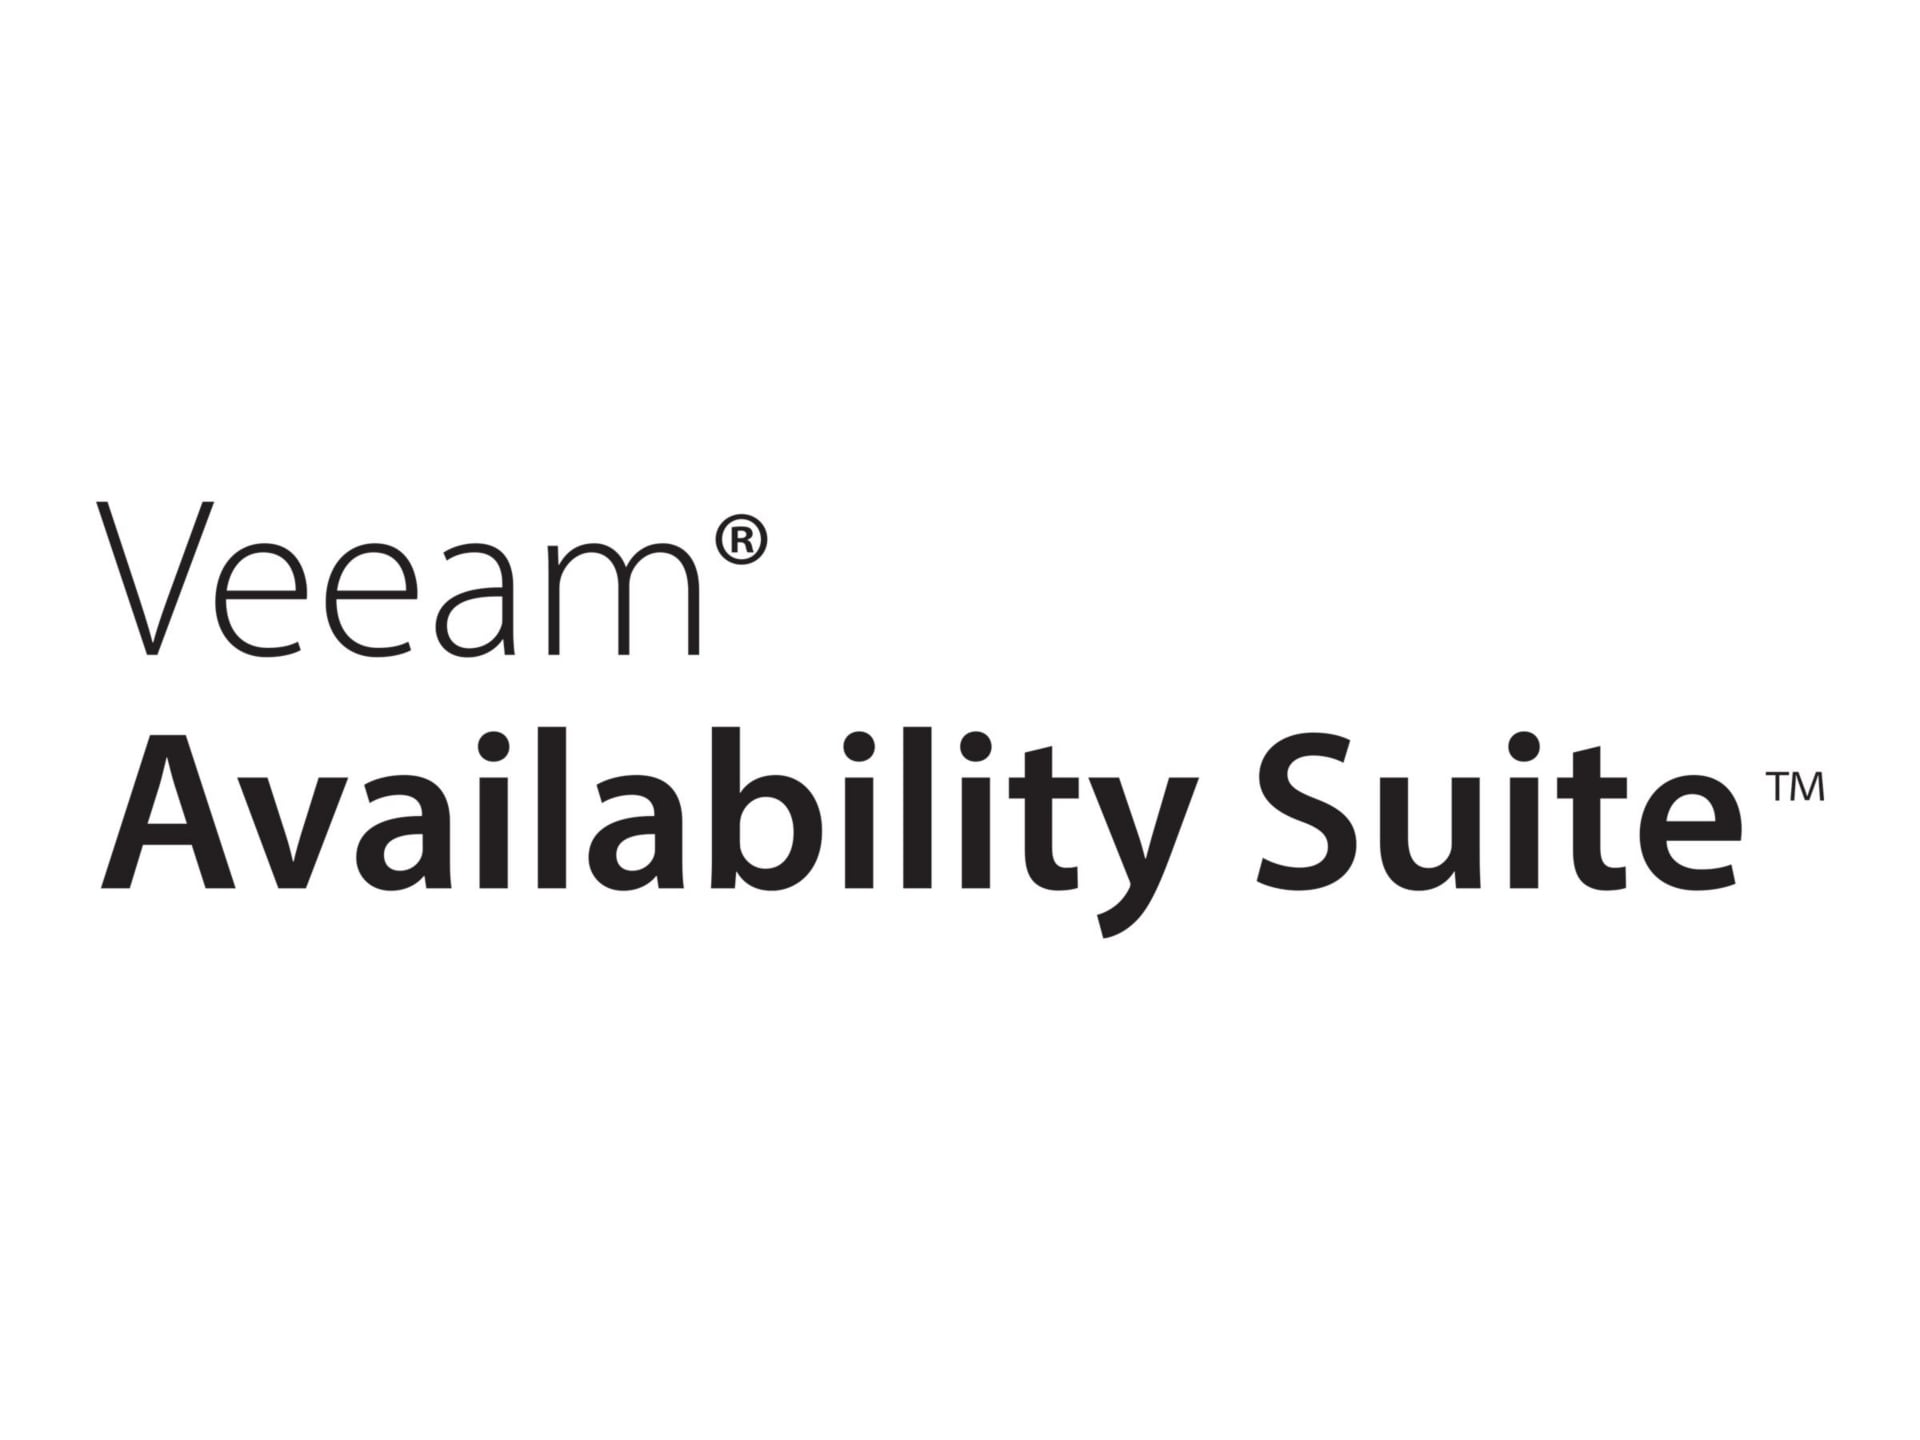 Veeam Availability Suite Universal License - Annual Billing License (renewa